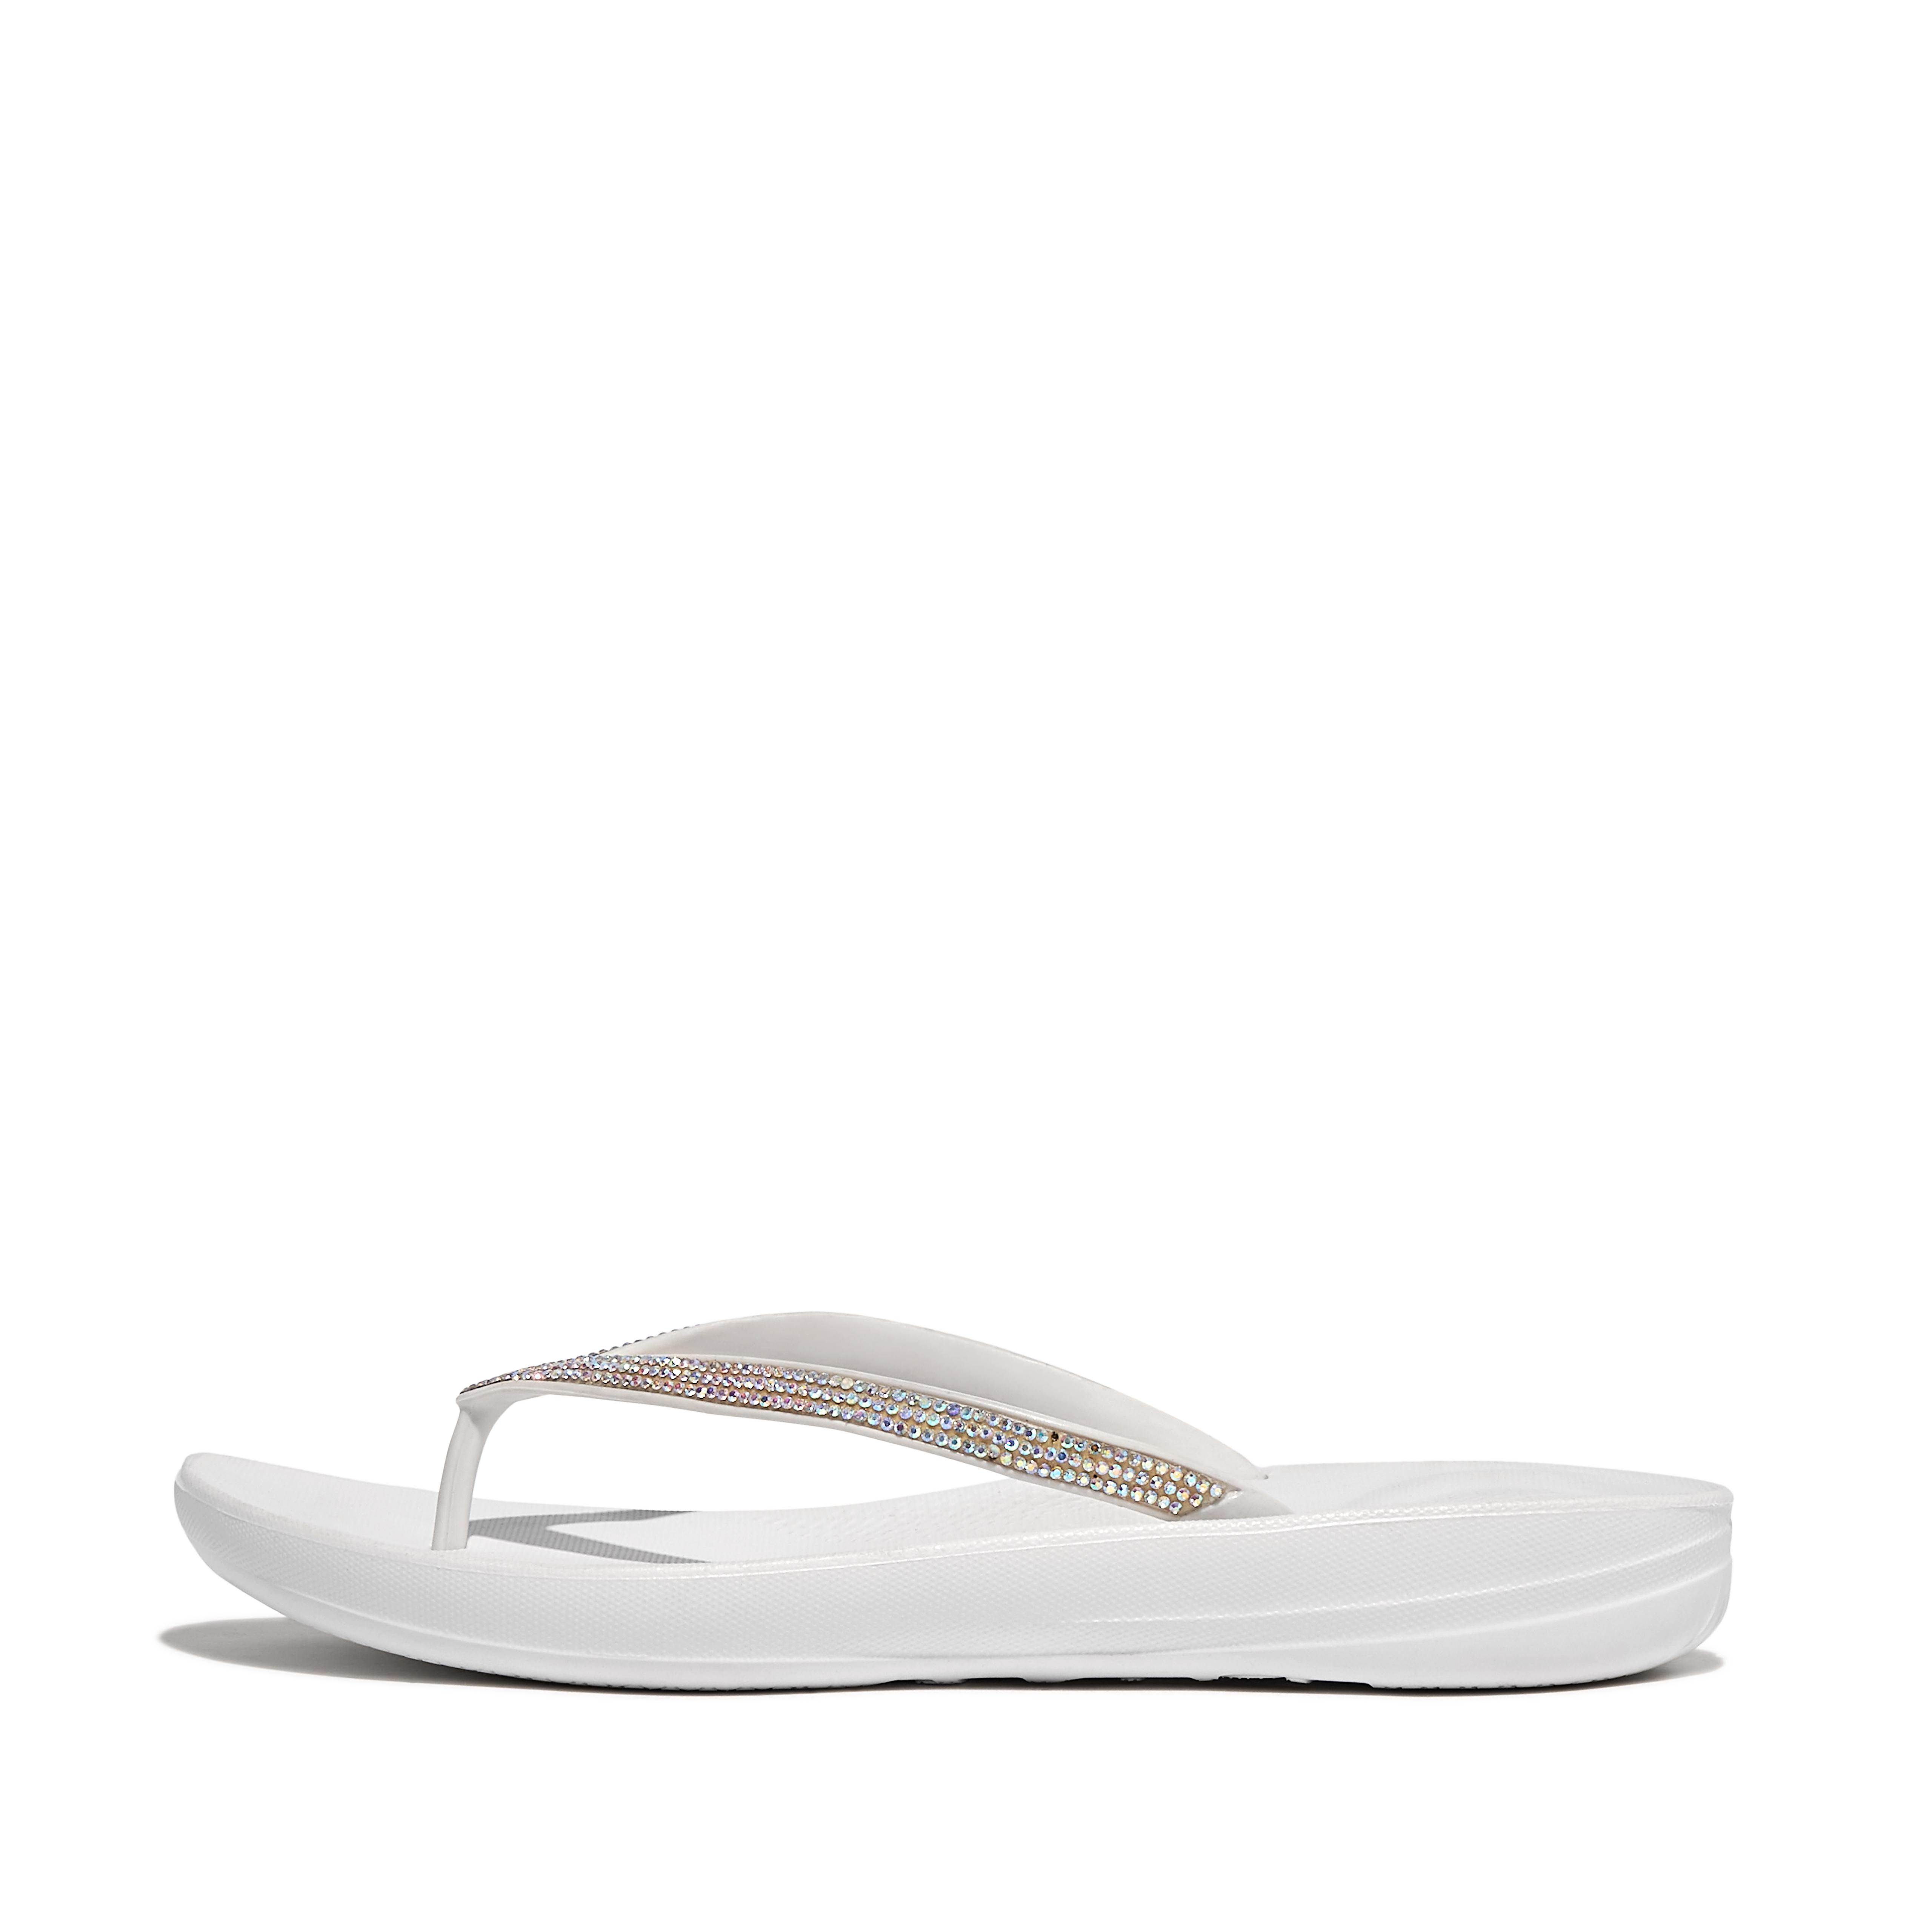 white sparkly flip flops